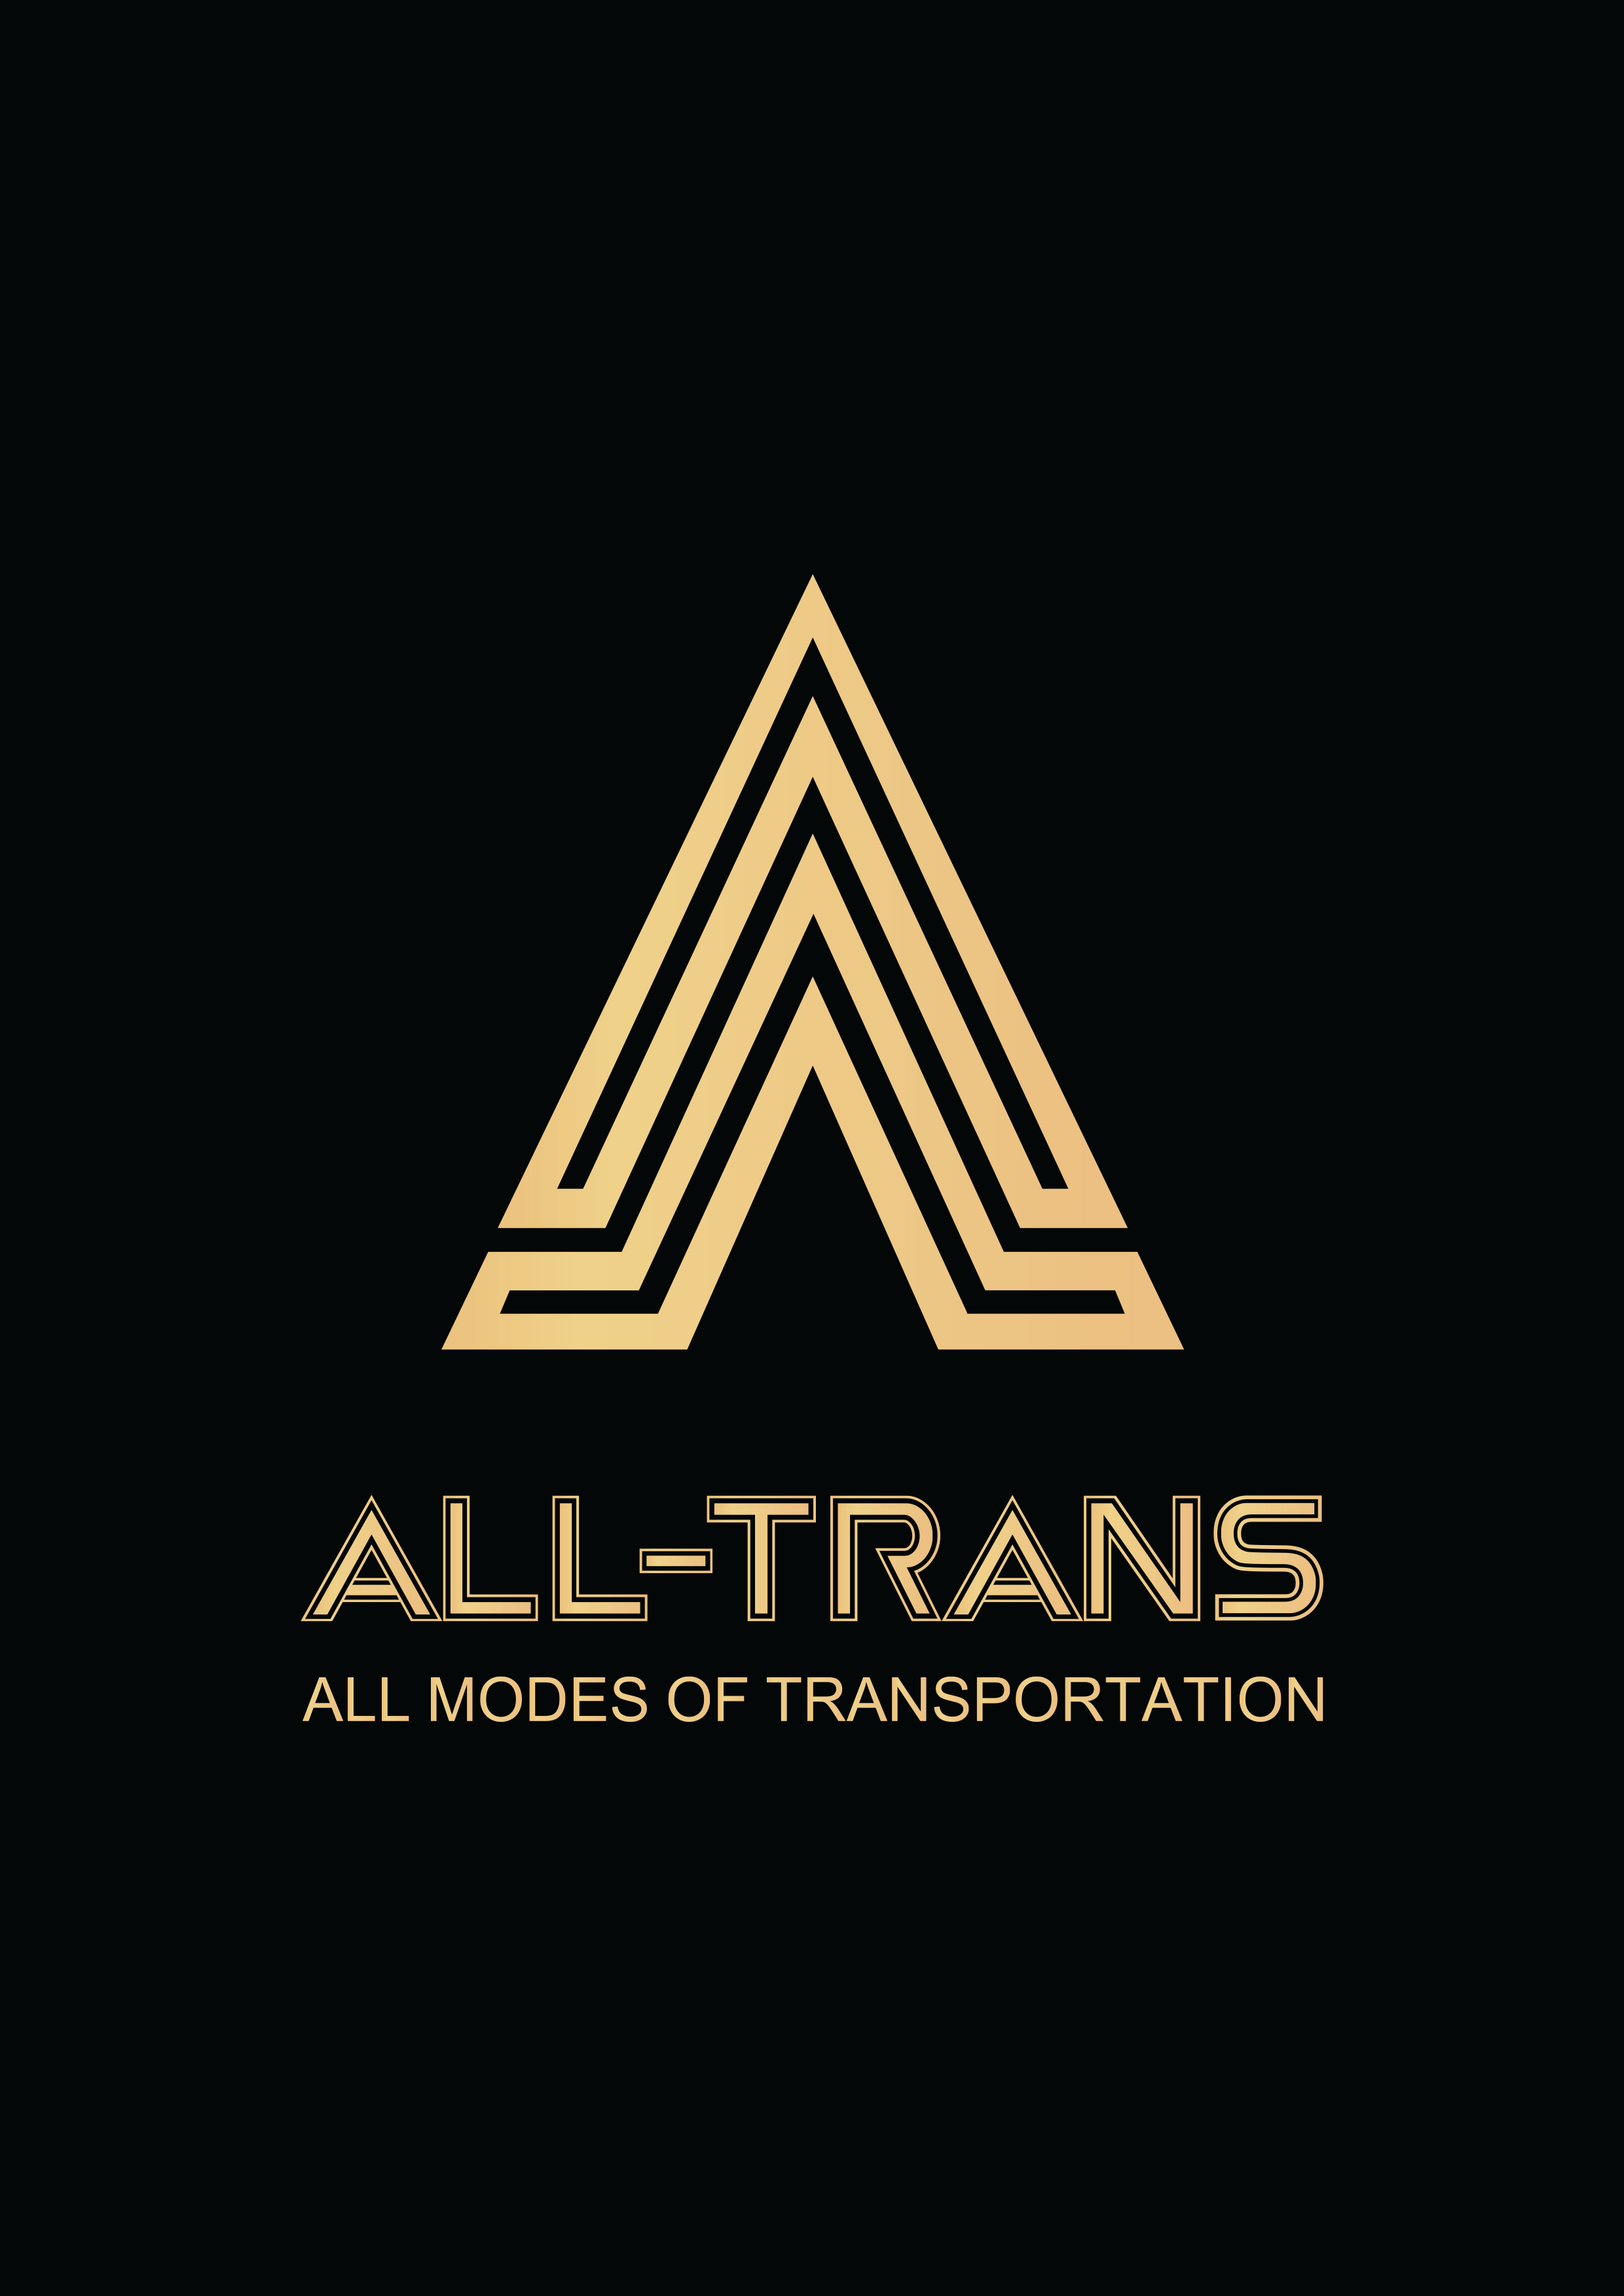 ALL-TRANS LLC